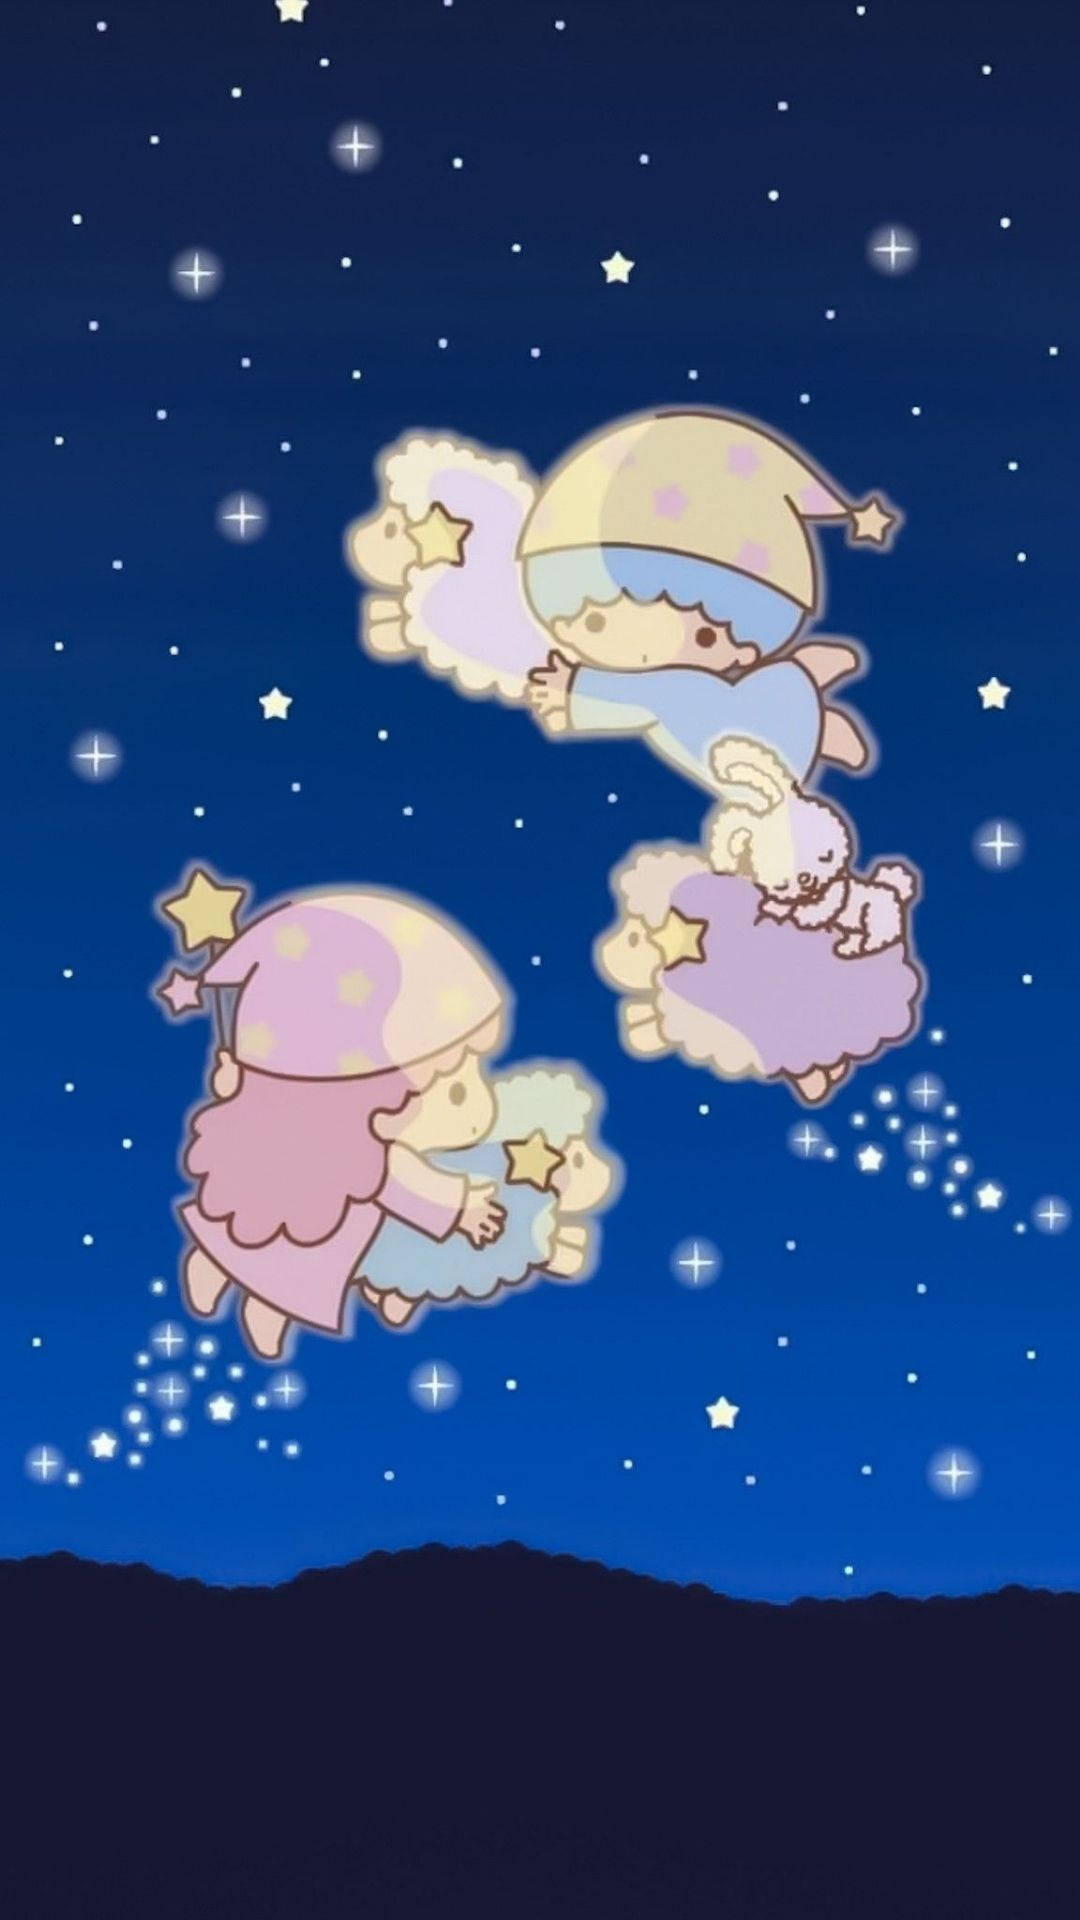 Chasing Little Twin Stars Wallpaper